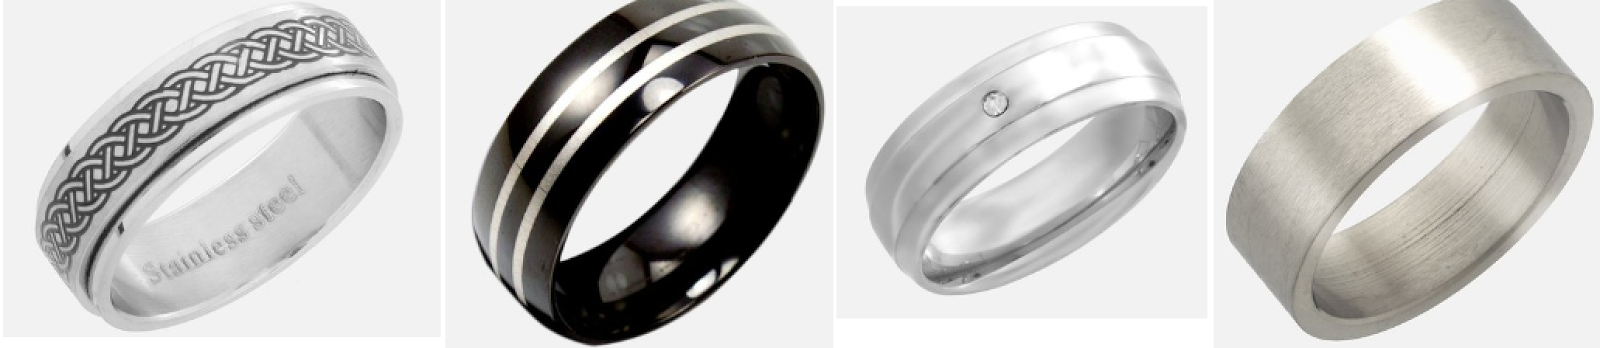 *HOT!* Tanga: Men's Stainless Steel Rings (lots of styles) = $5.99 ...